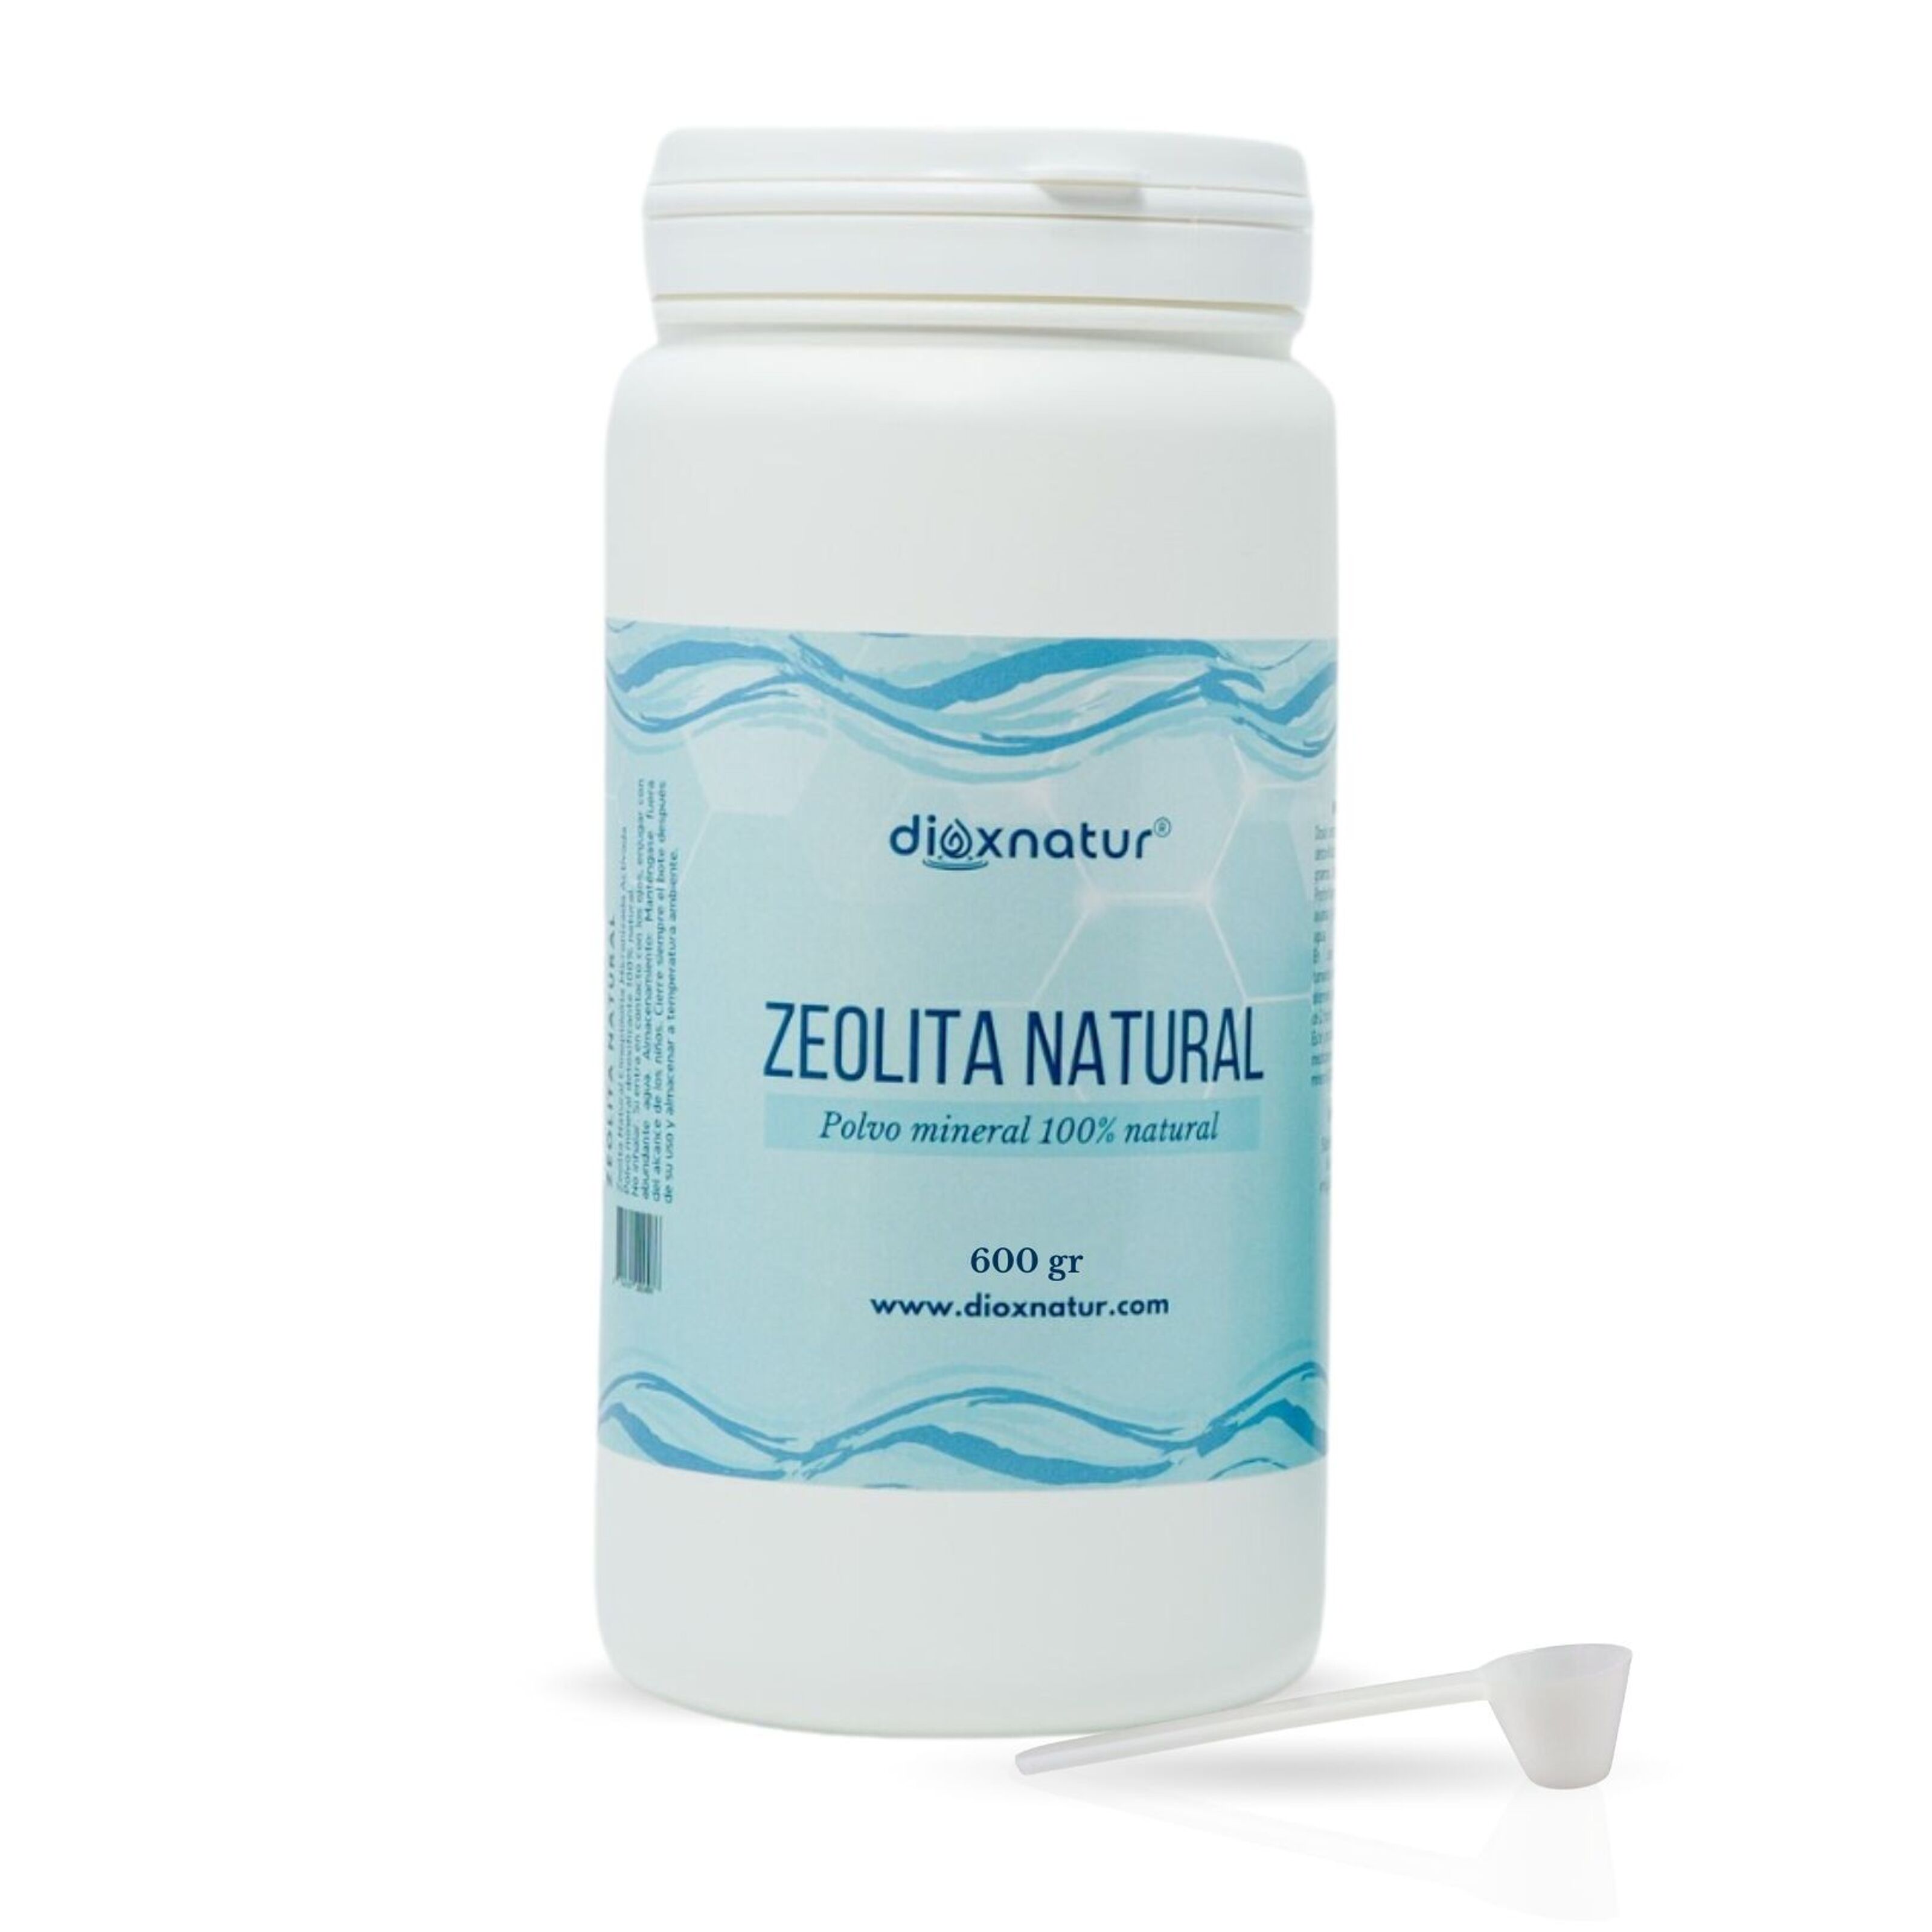 Compra Dioxnatur® Zeolita Natural Clinoptilolita Micronizada Polvo (600 gr)  al por mayor